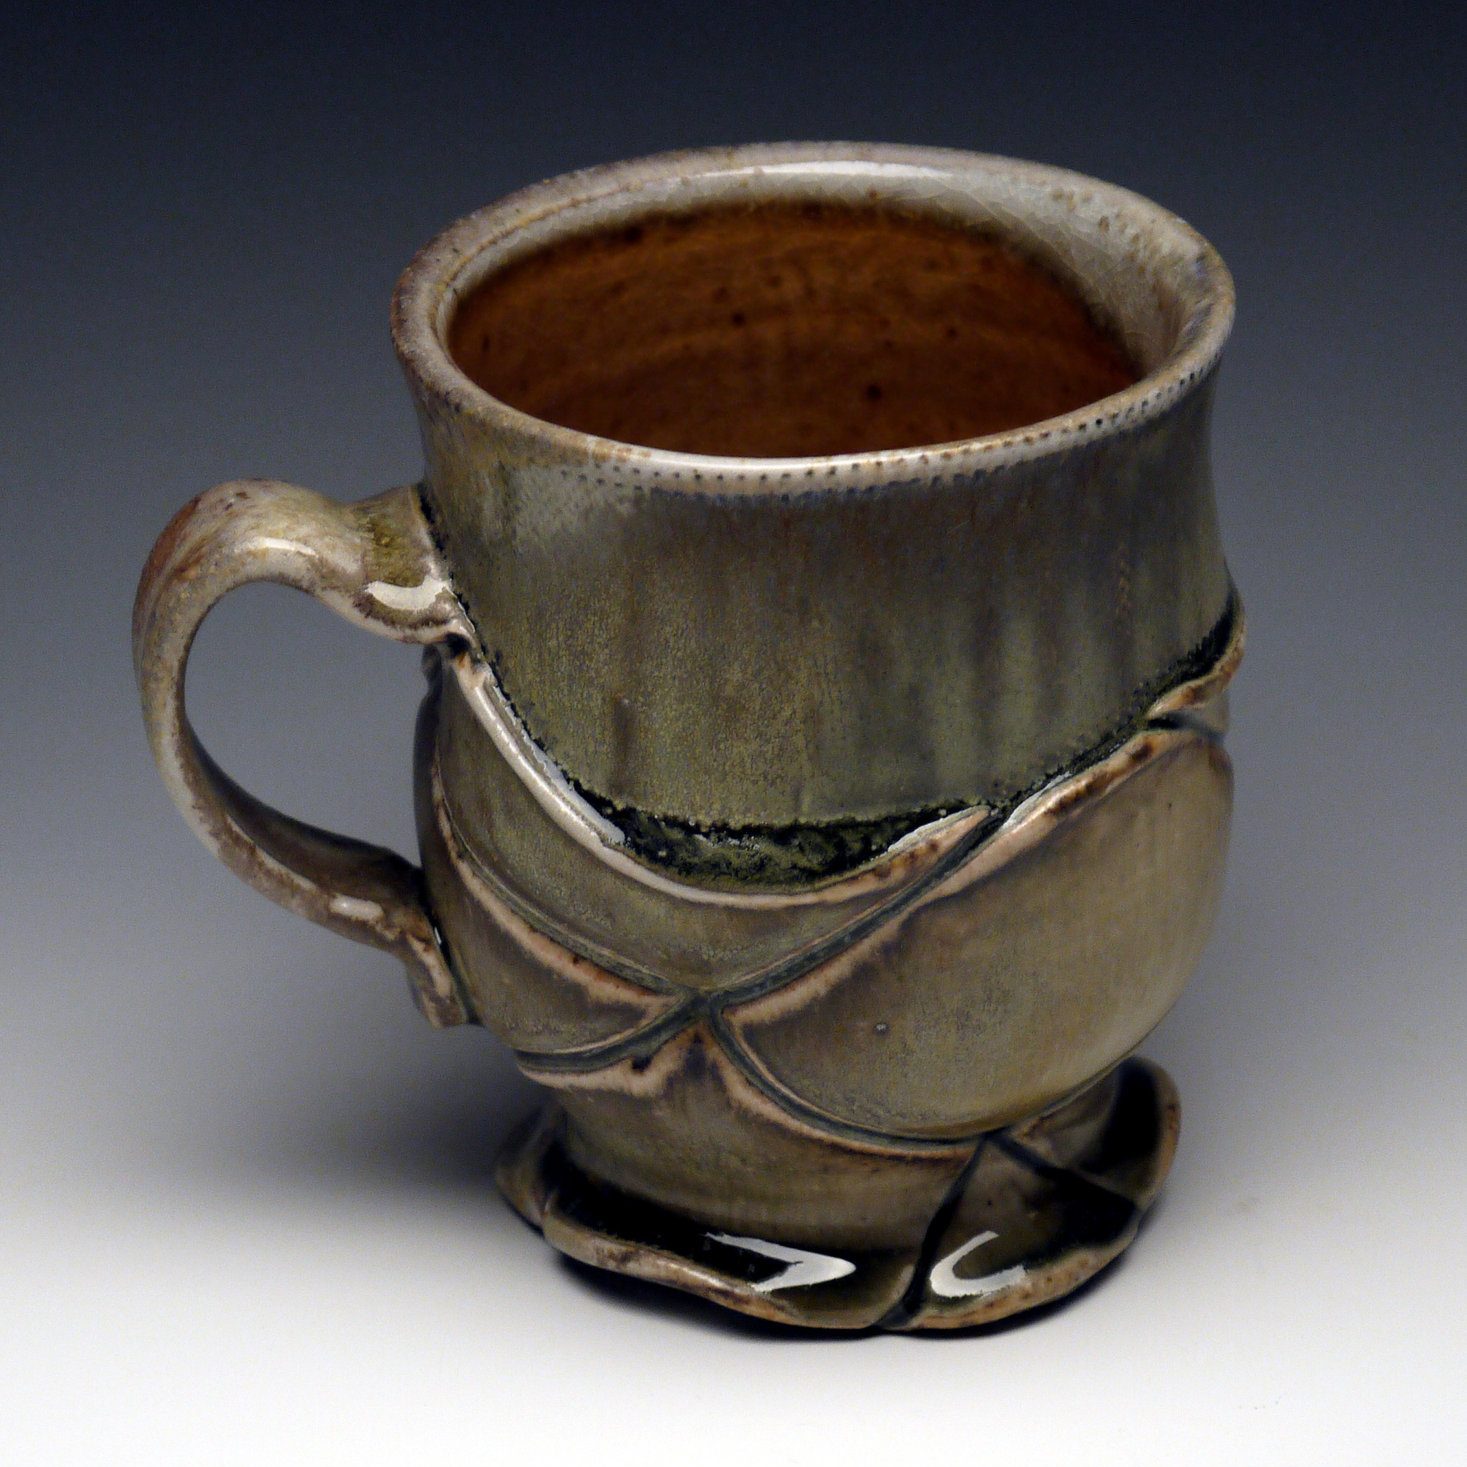 Coffee / Tea Cup, green celadon, shino glaze, wood fired porcelain